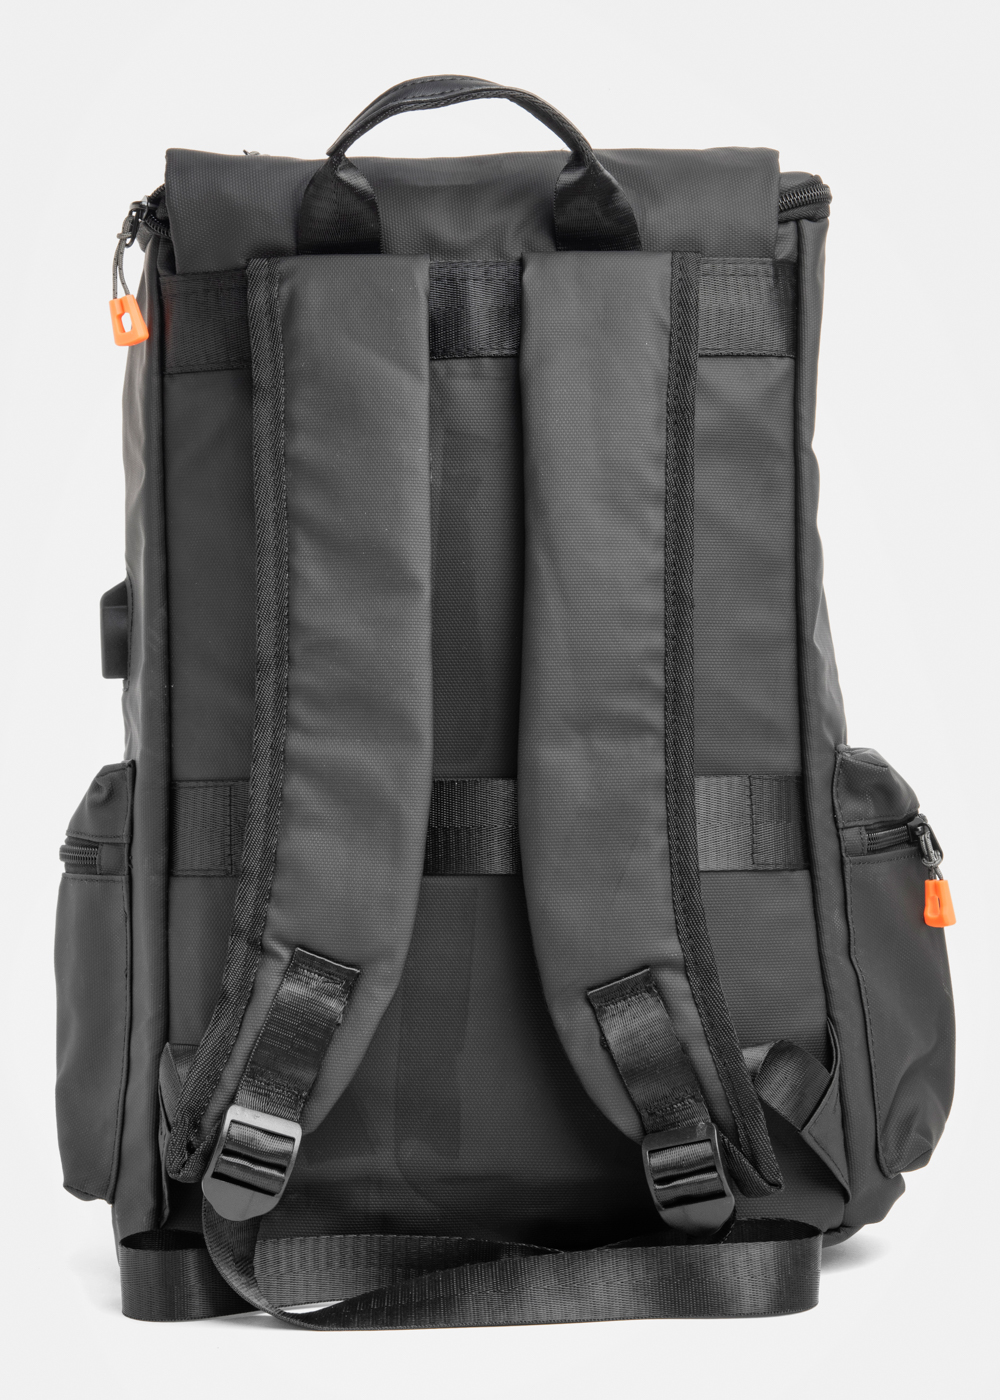 Black Avventura Backpack 3 w/ Charger